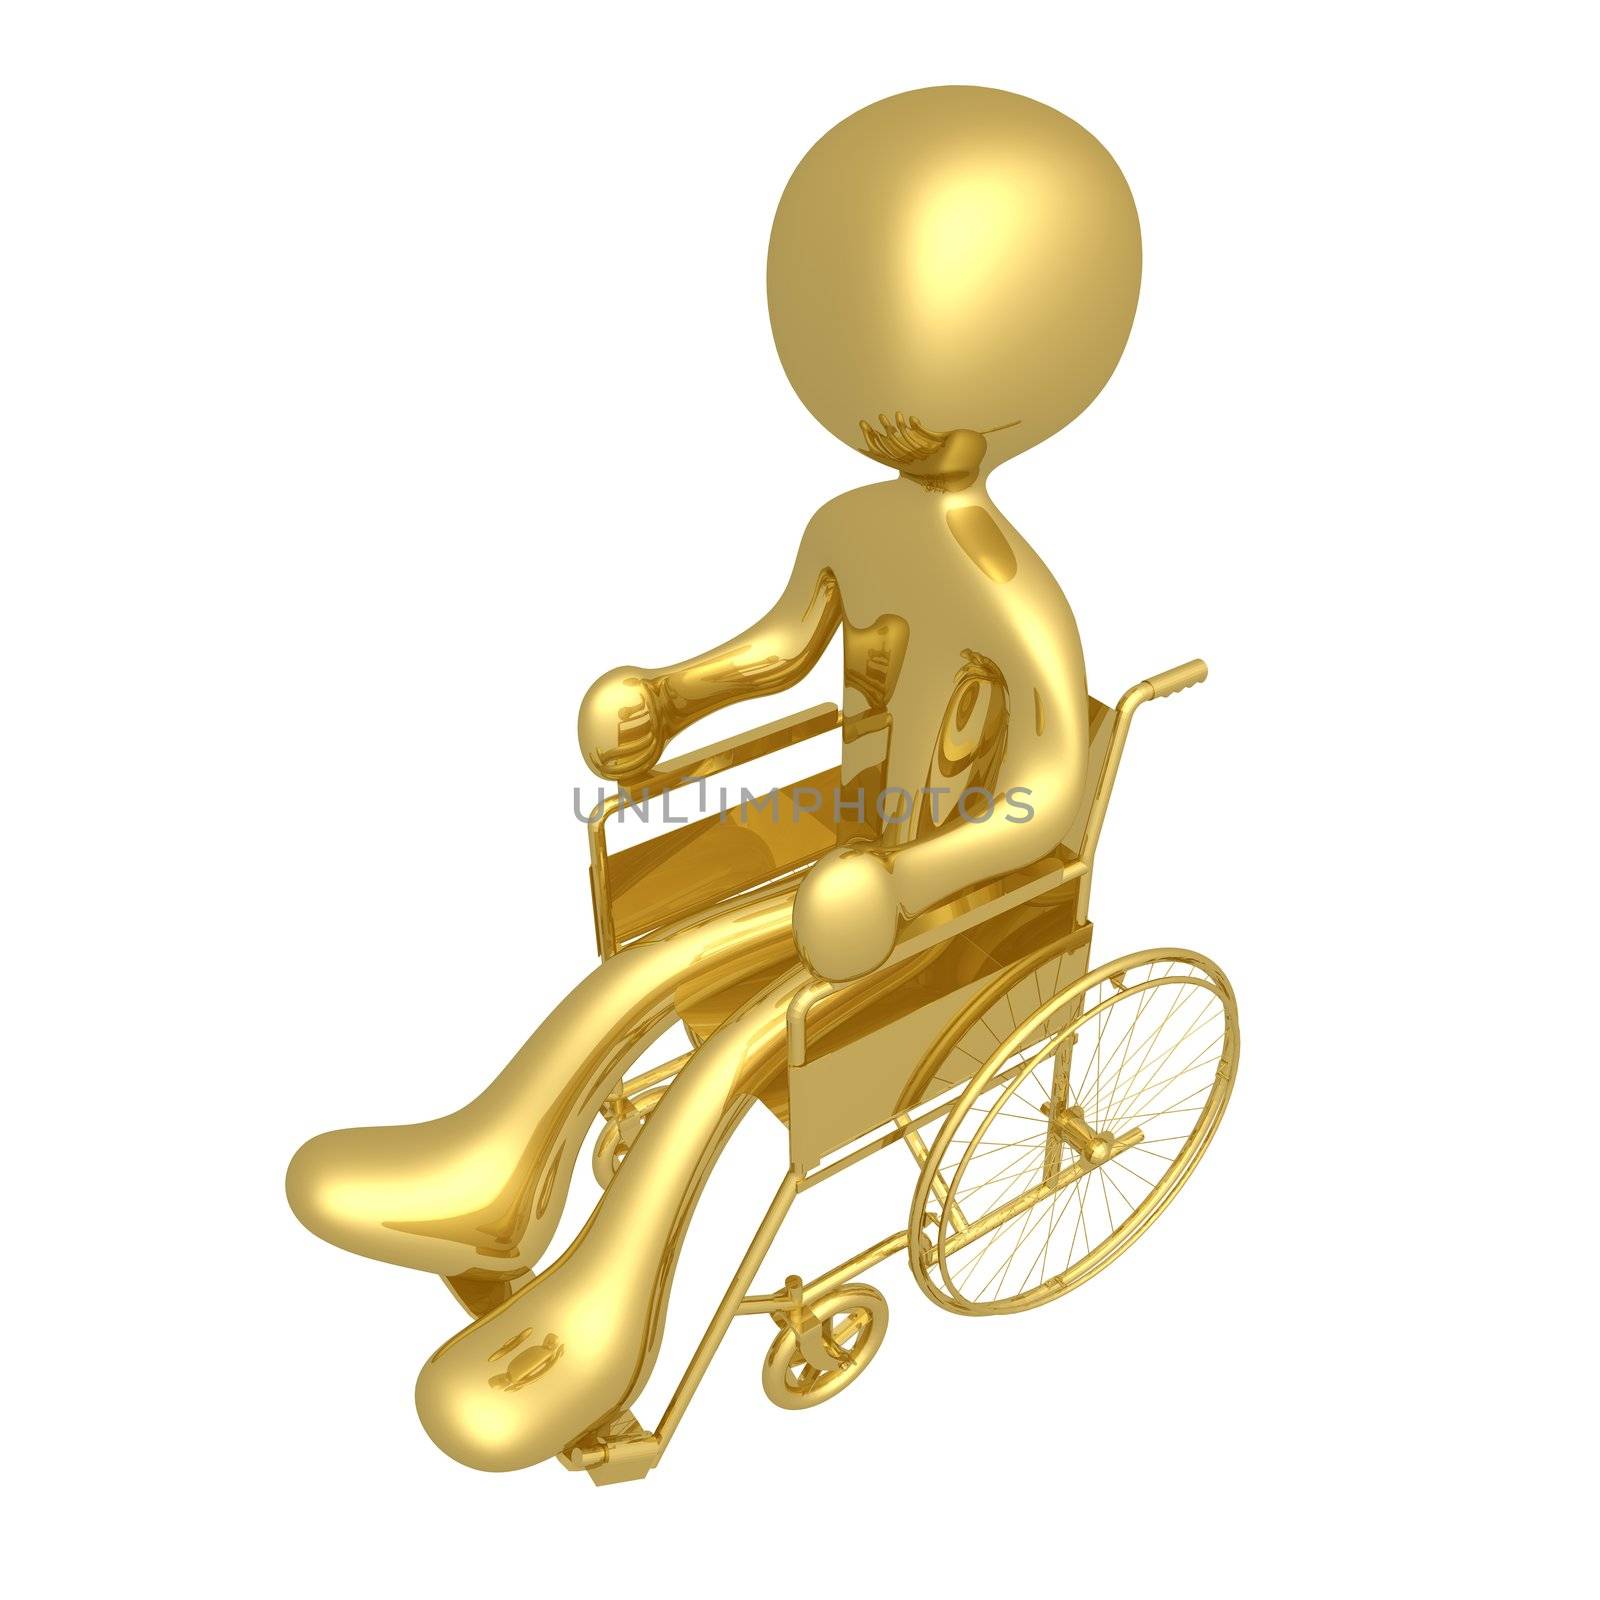 Wheelchair by 3pod